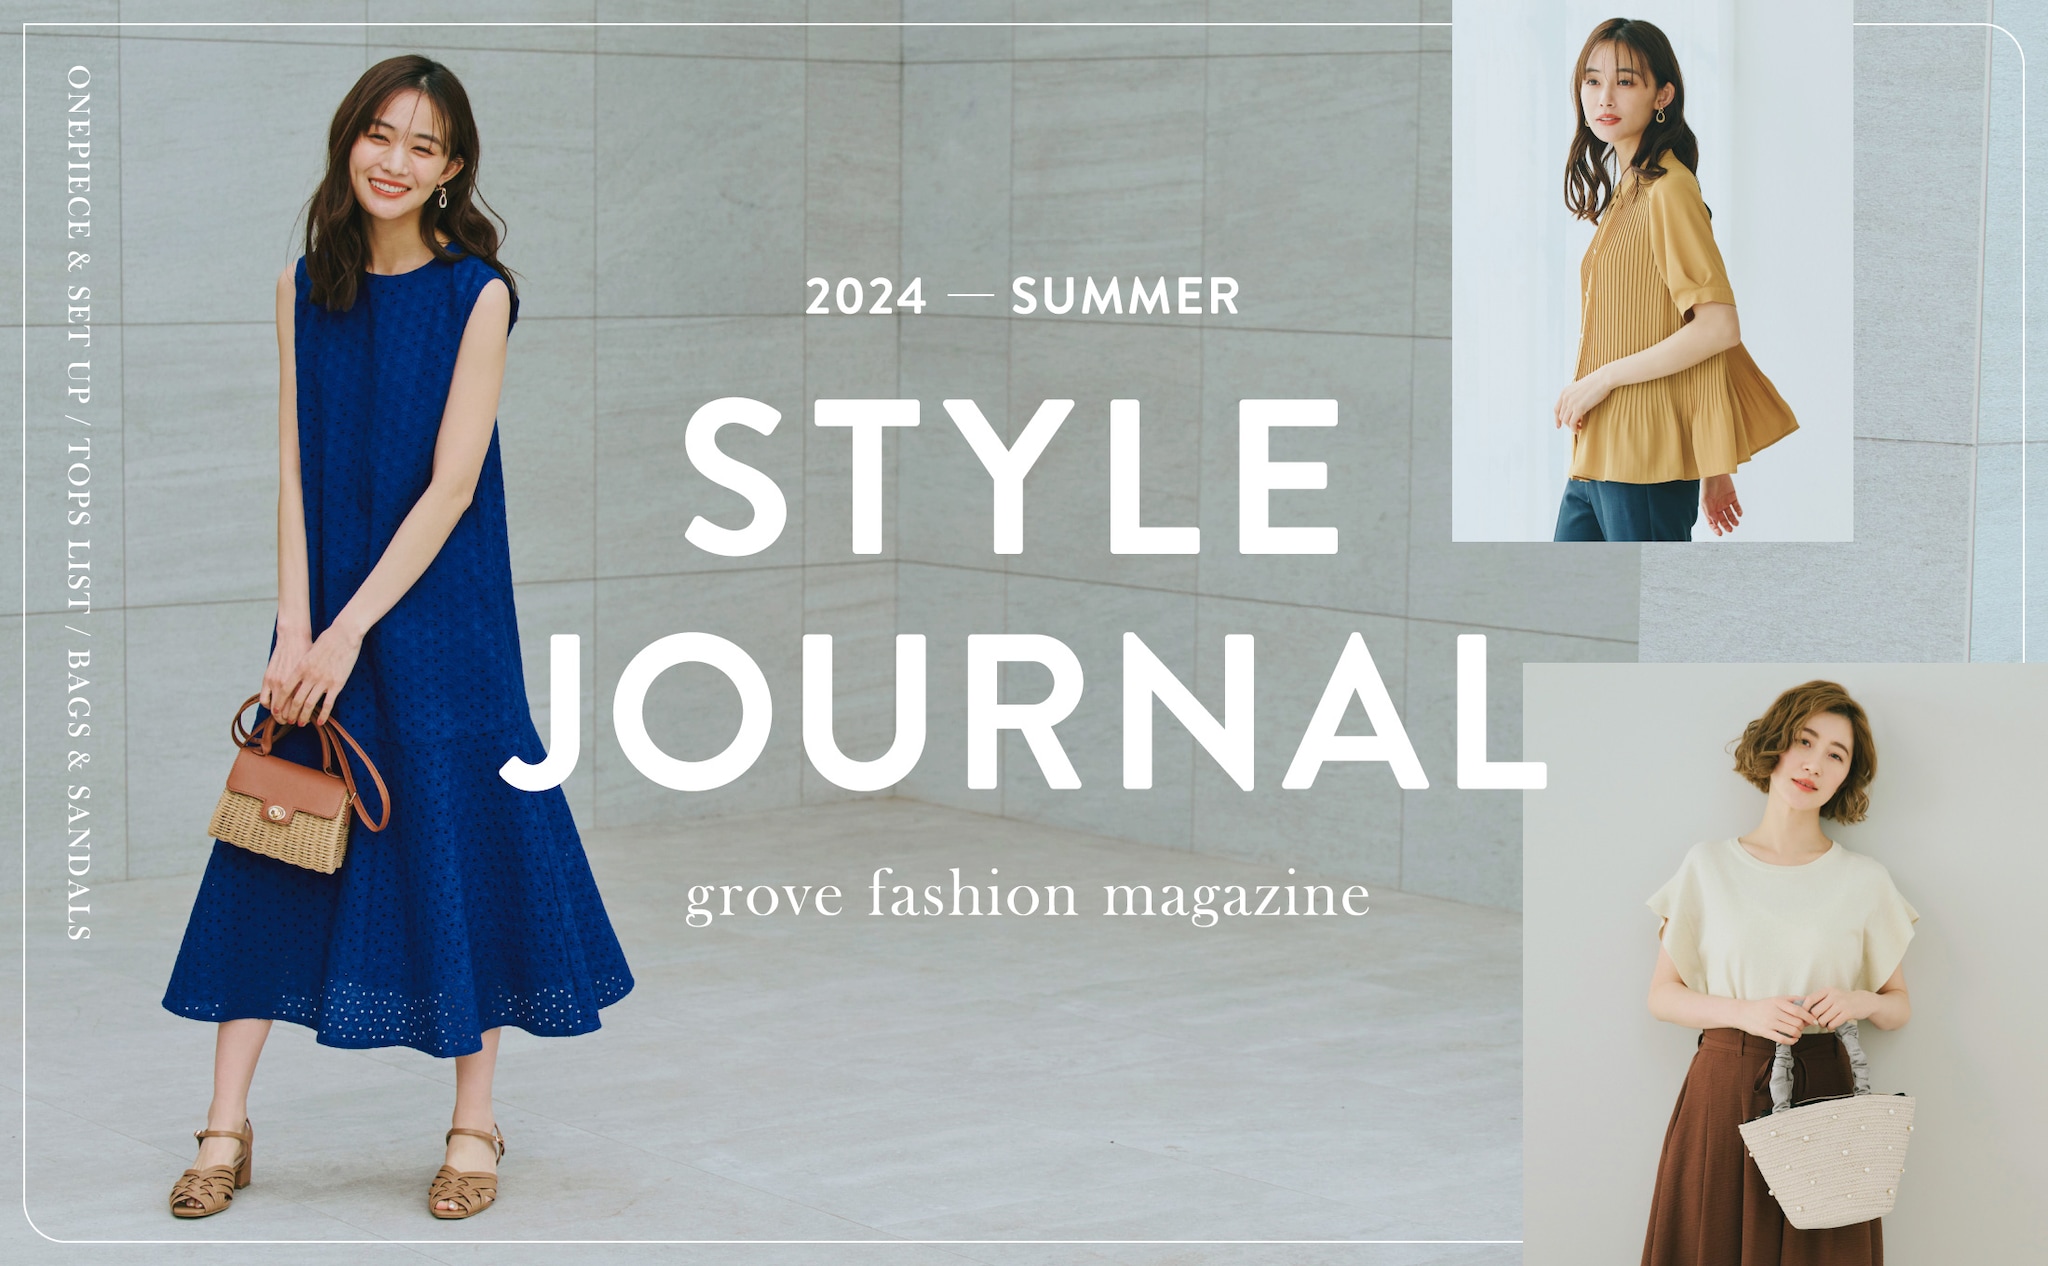 2024 SUMMER STYLE JOURNAL grove fashion magazine